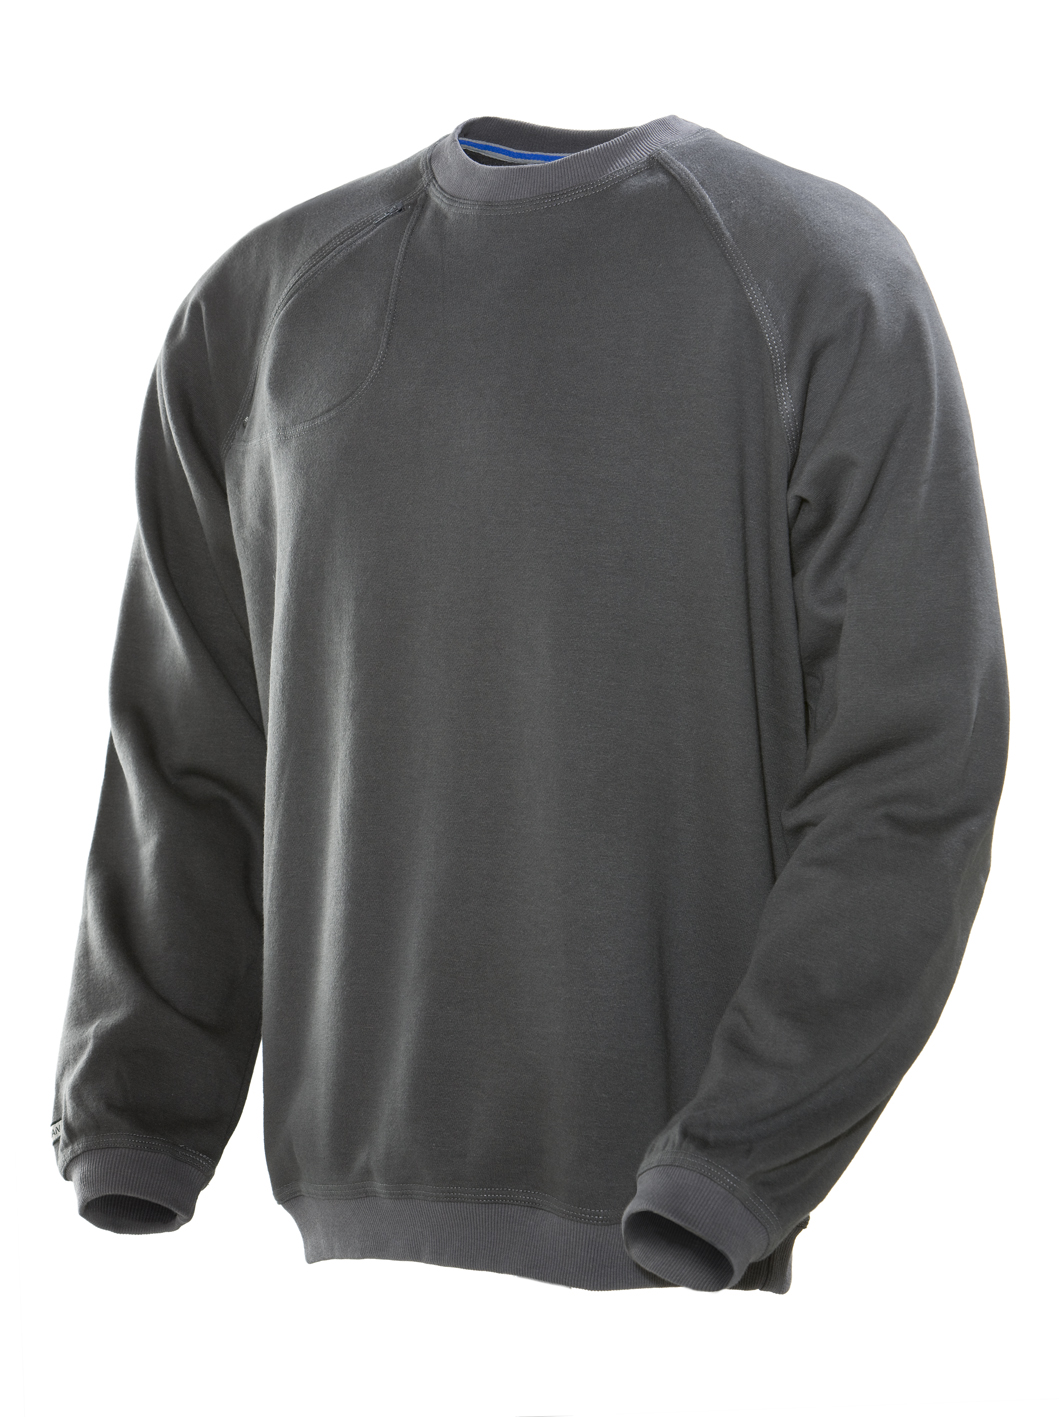 5122 Sweatshirt 3XL gris antracite